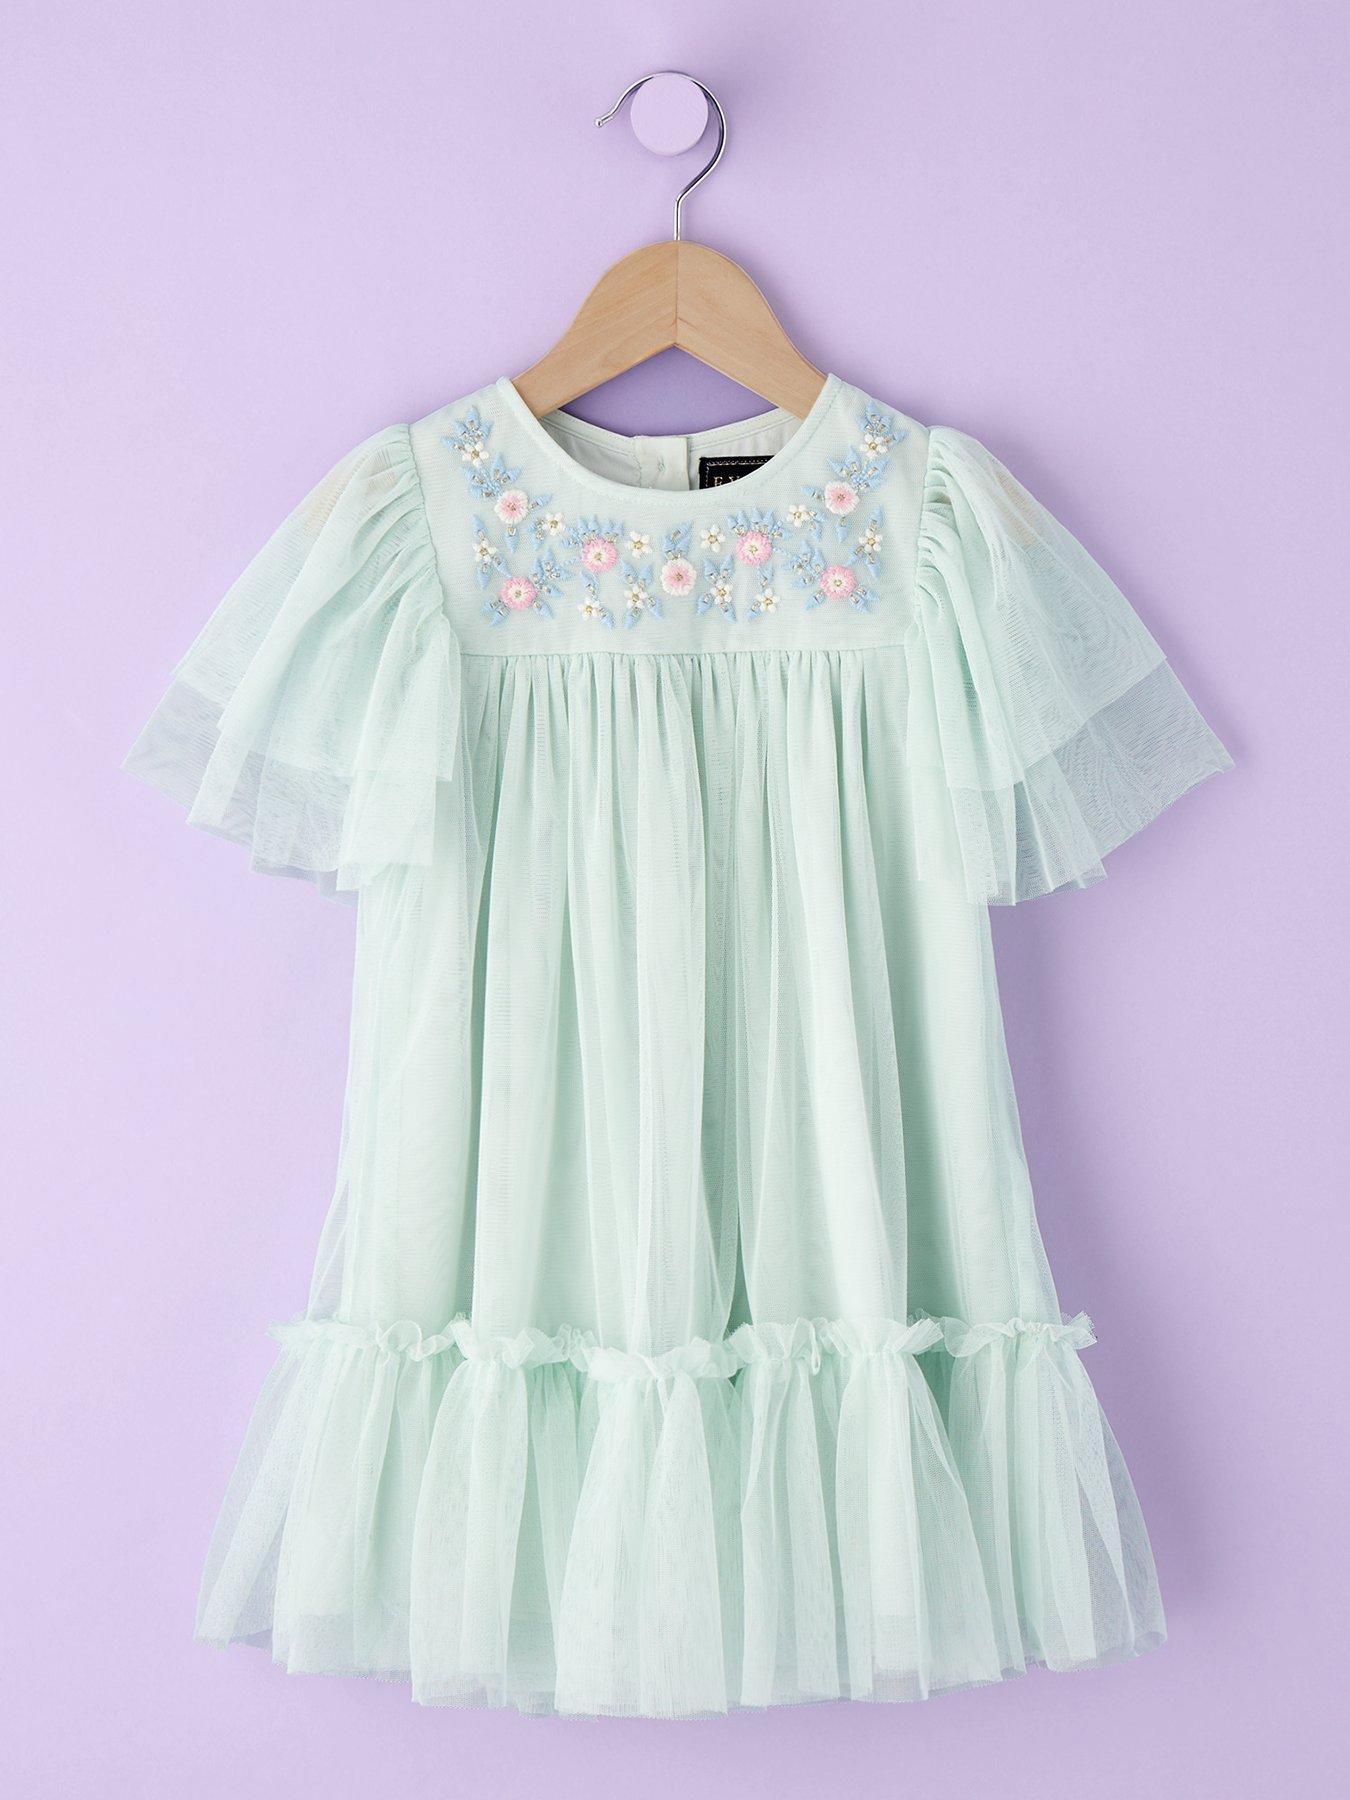 Baby Girl Dress Summer New Design| Alibaba.com